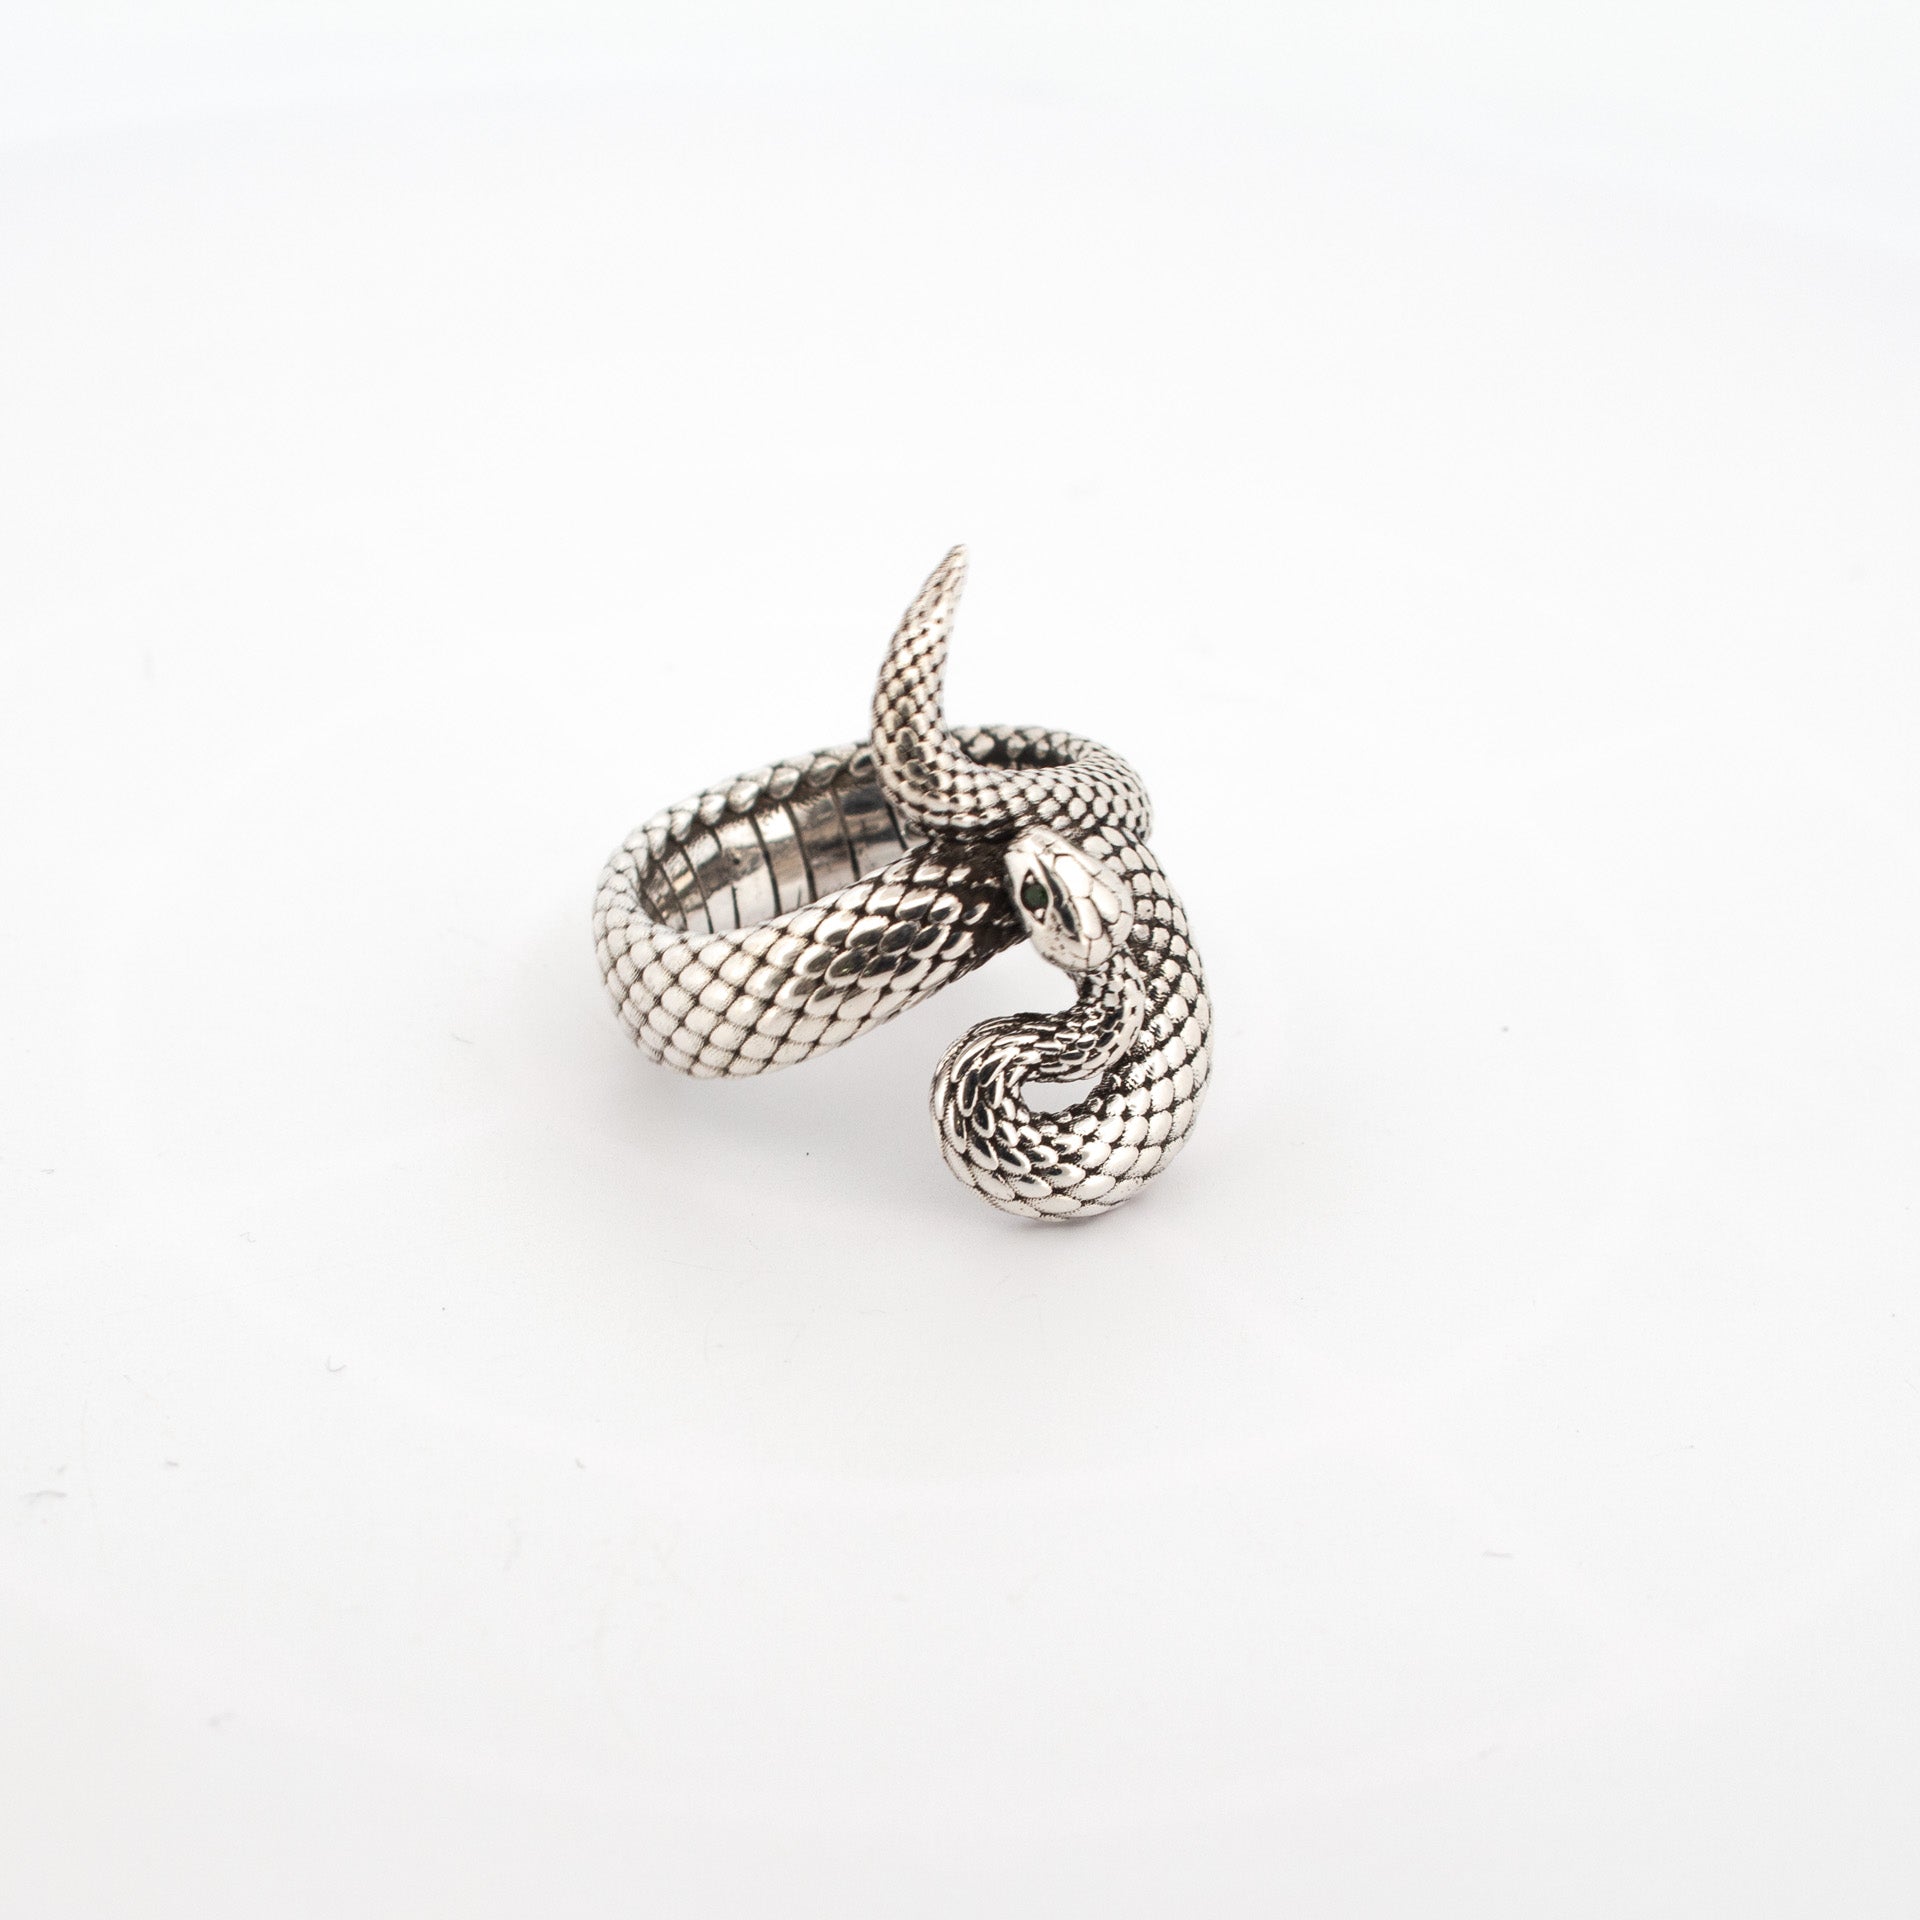 Silver Snake Ring with gem set eye